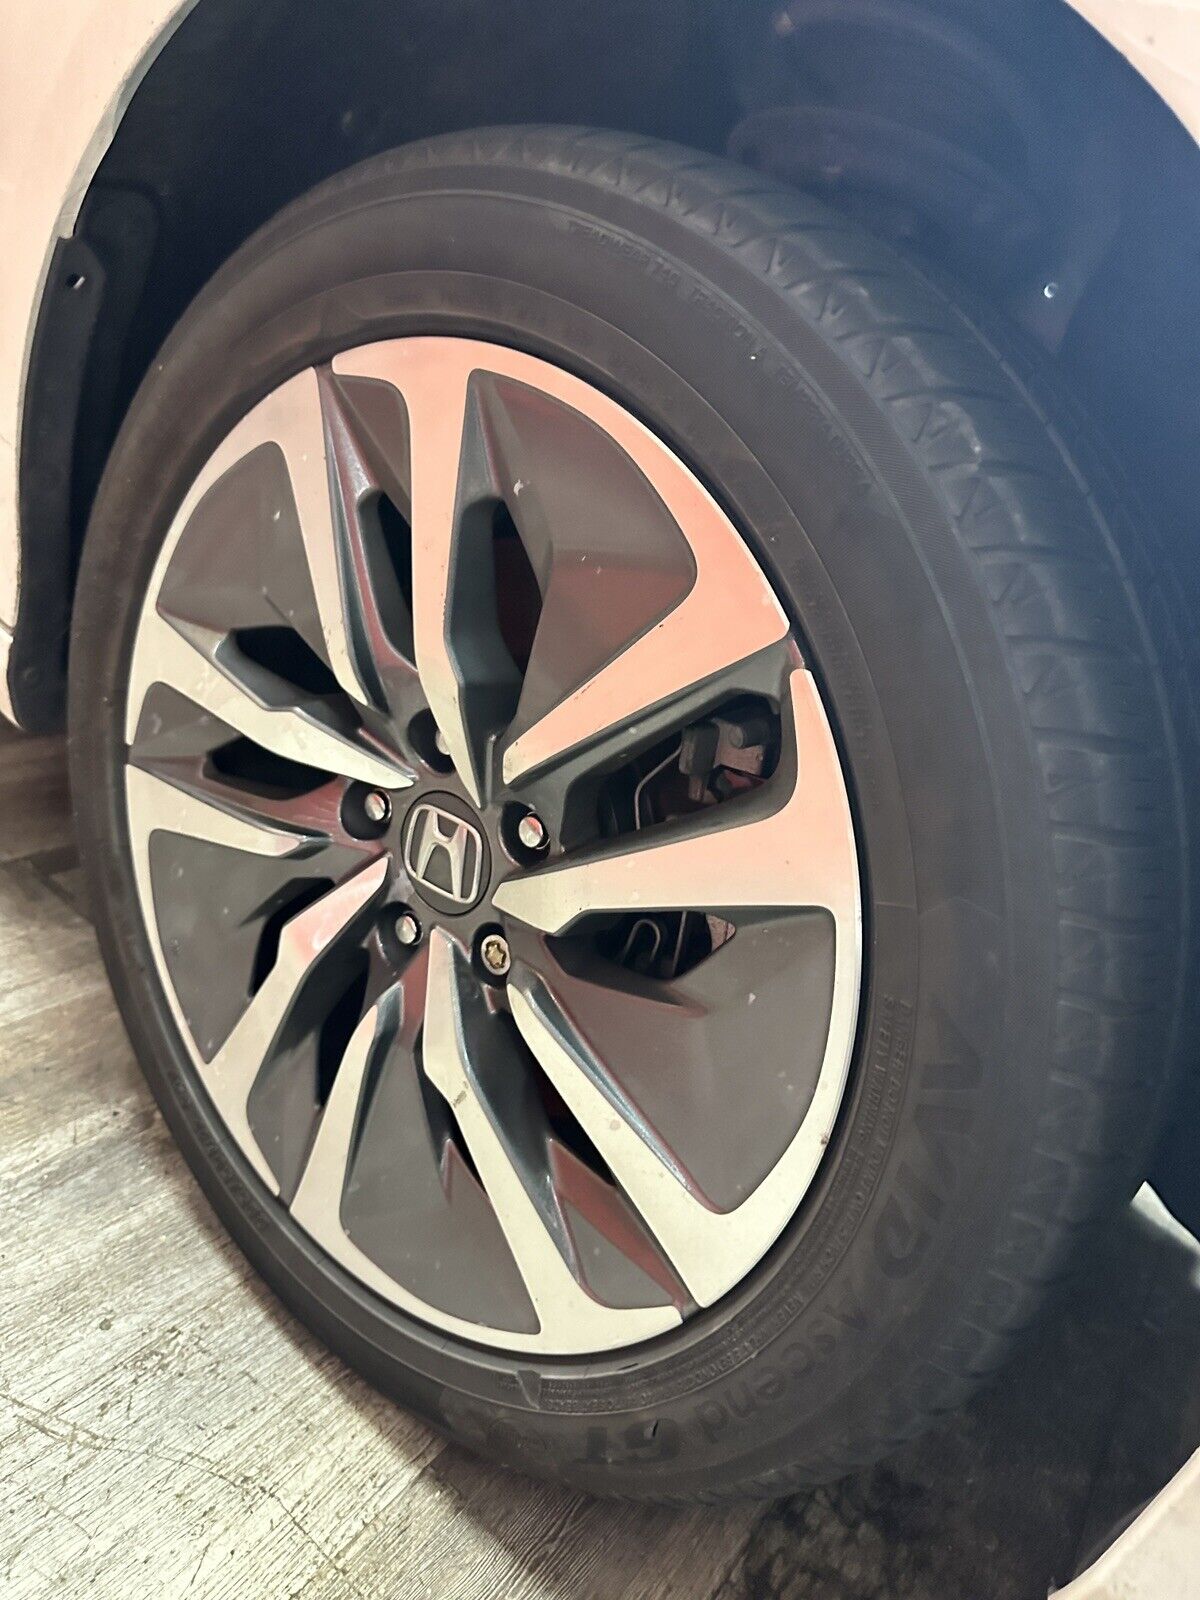 2019 Honda Accord Hybrid 17” Wheel And Tires